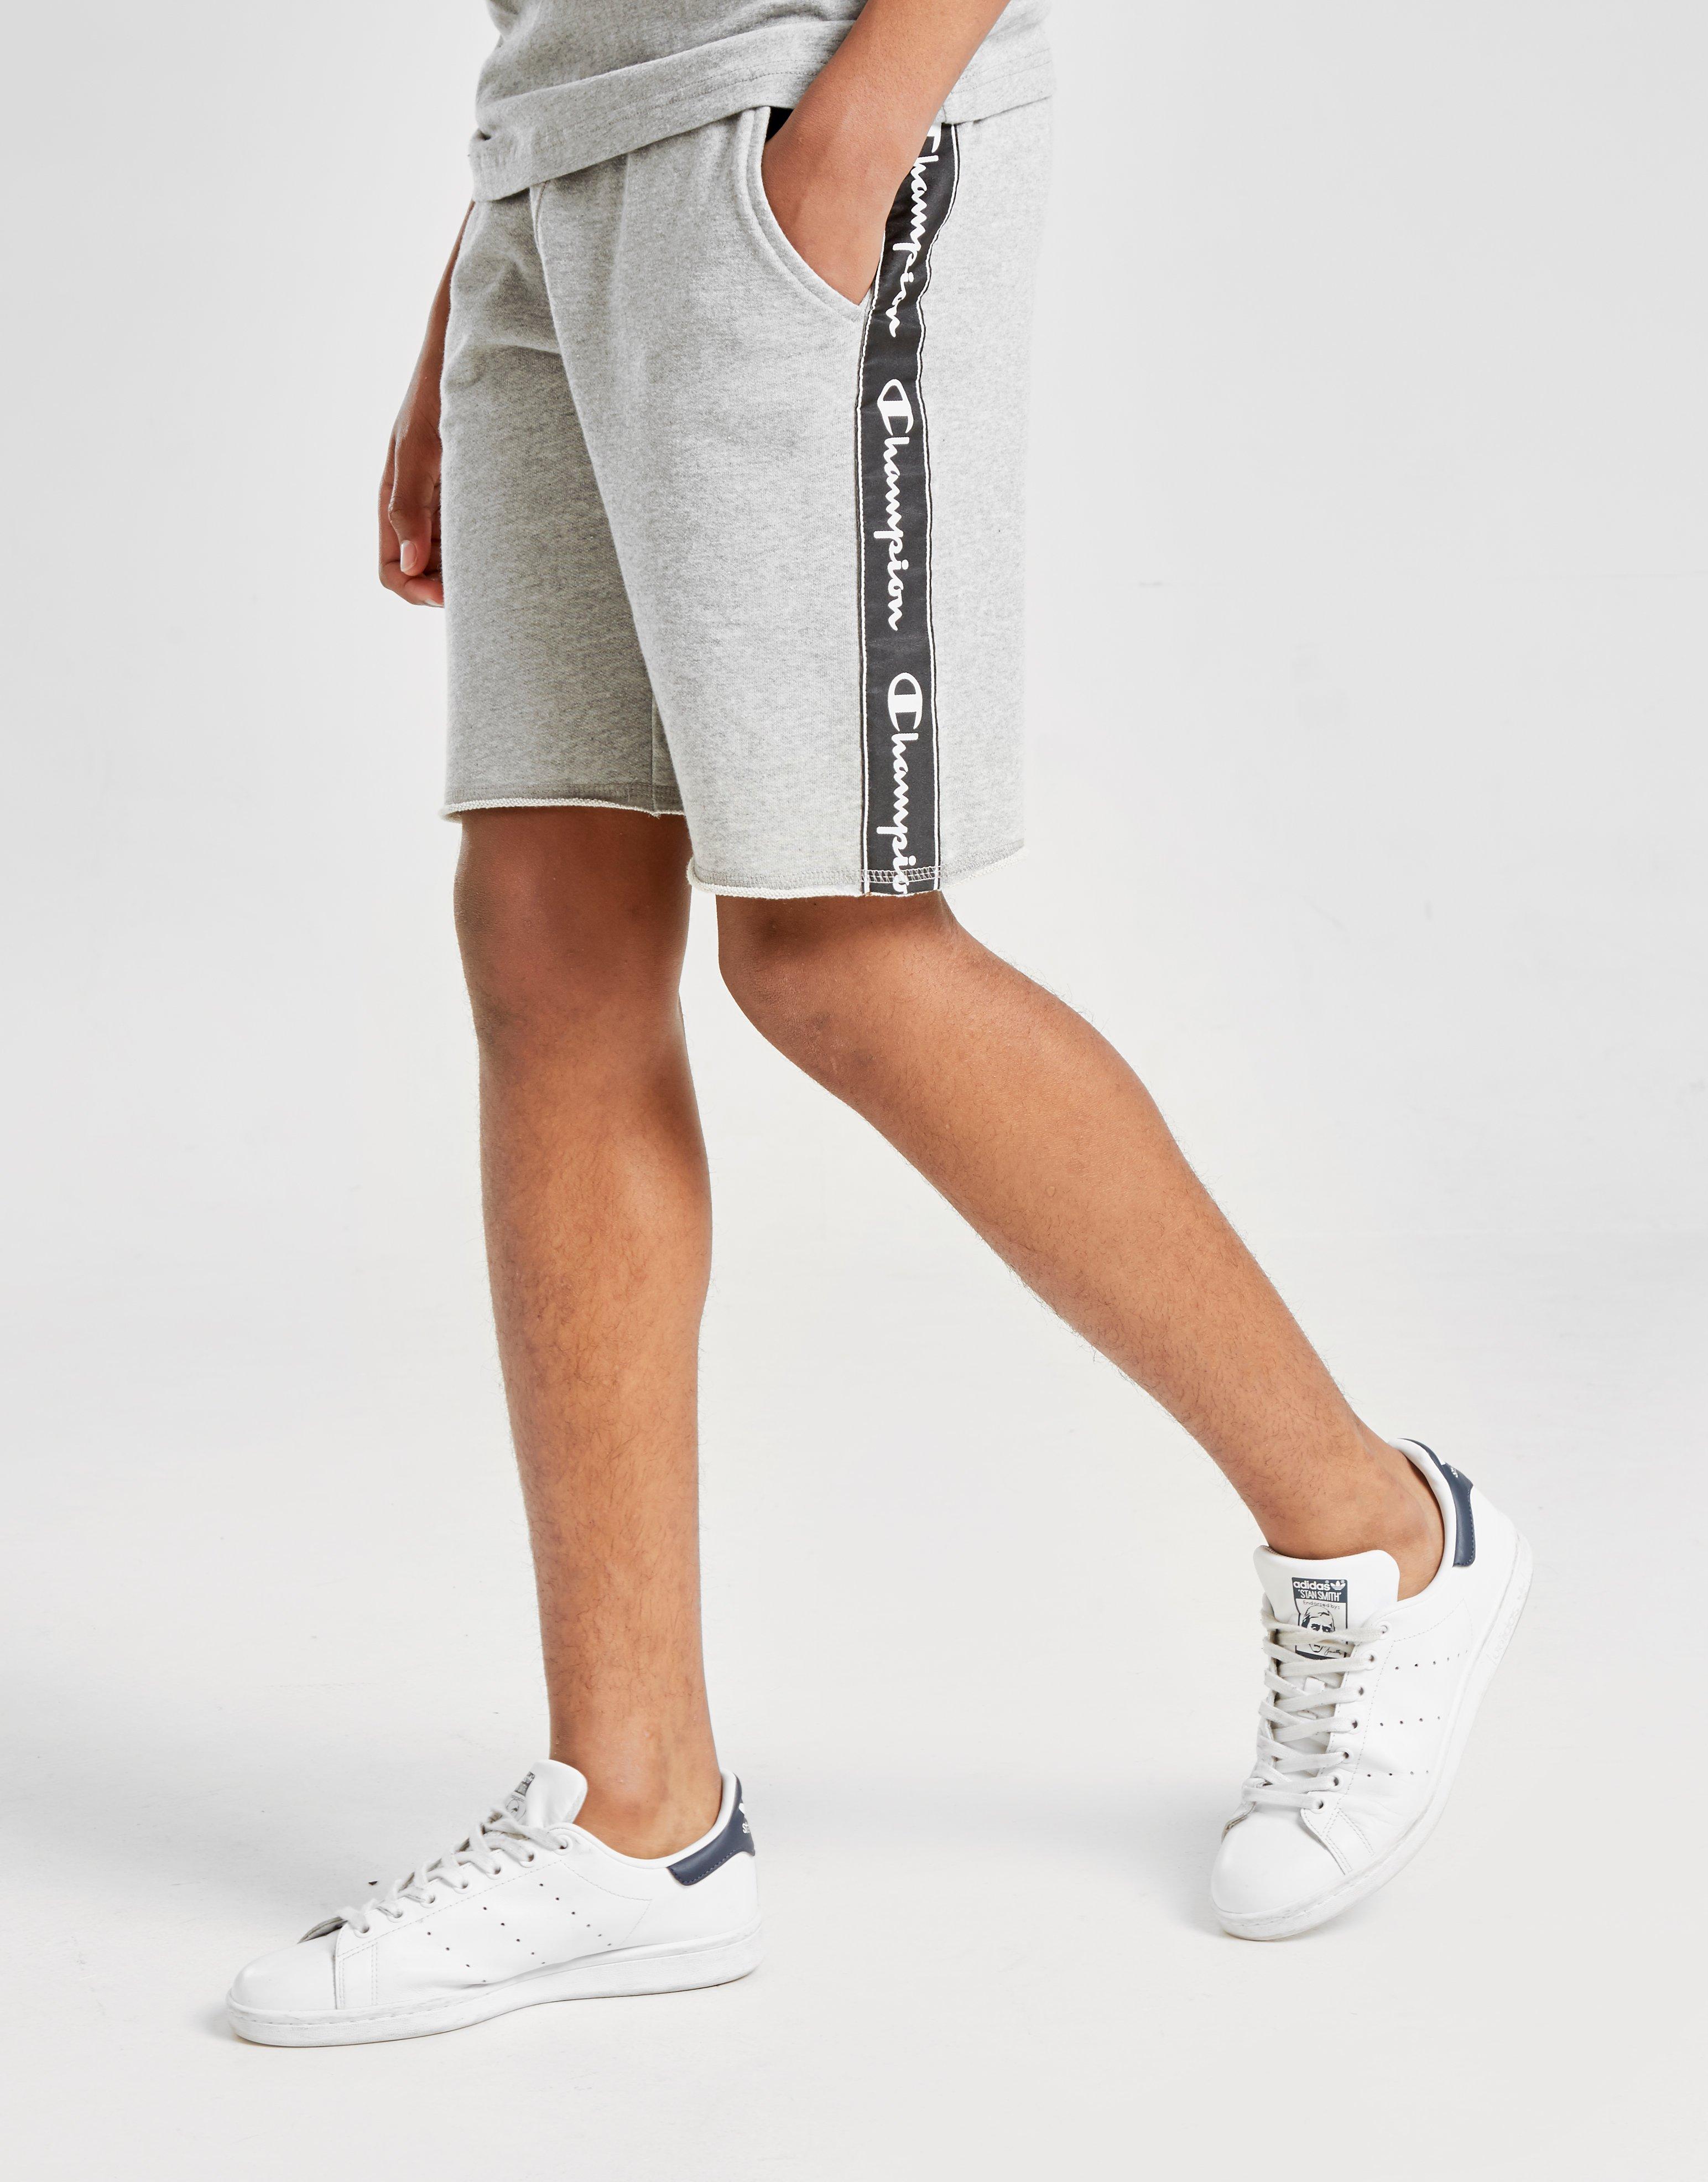 New CHAMPION Tape Shorts Junior | eBay